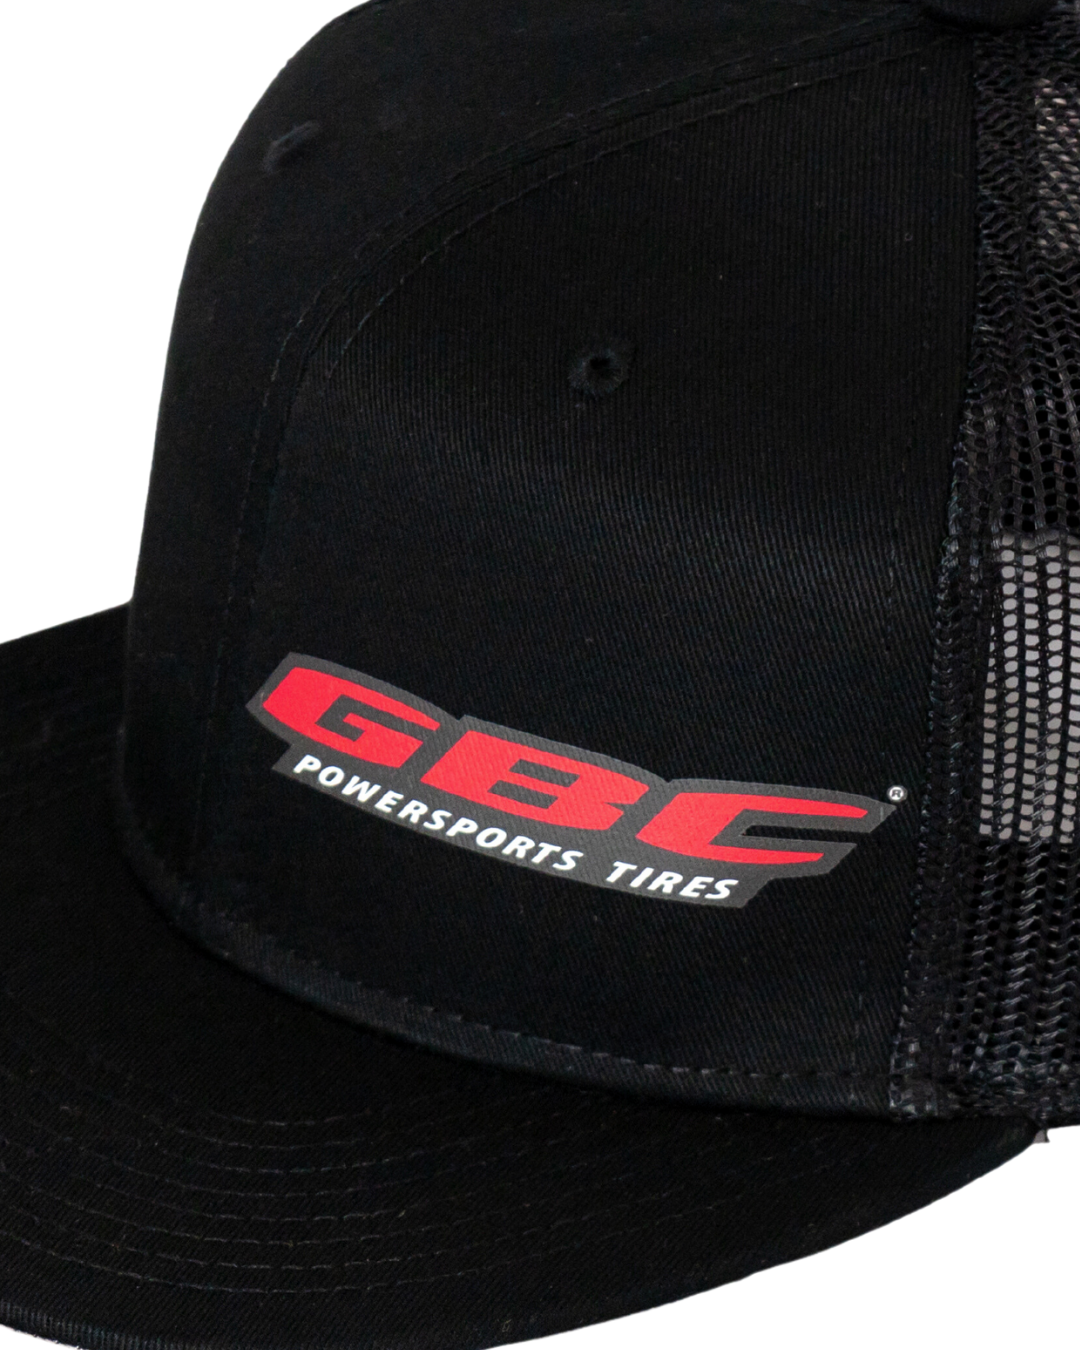 GBC Powersports Black Hat with Red Logo